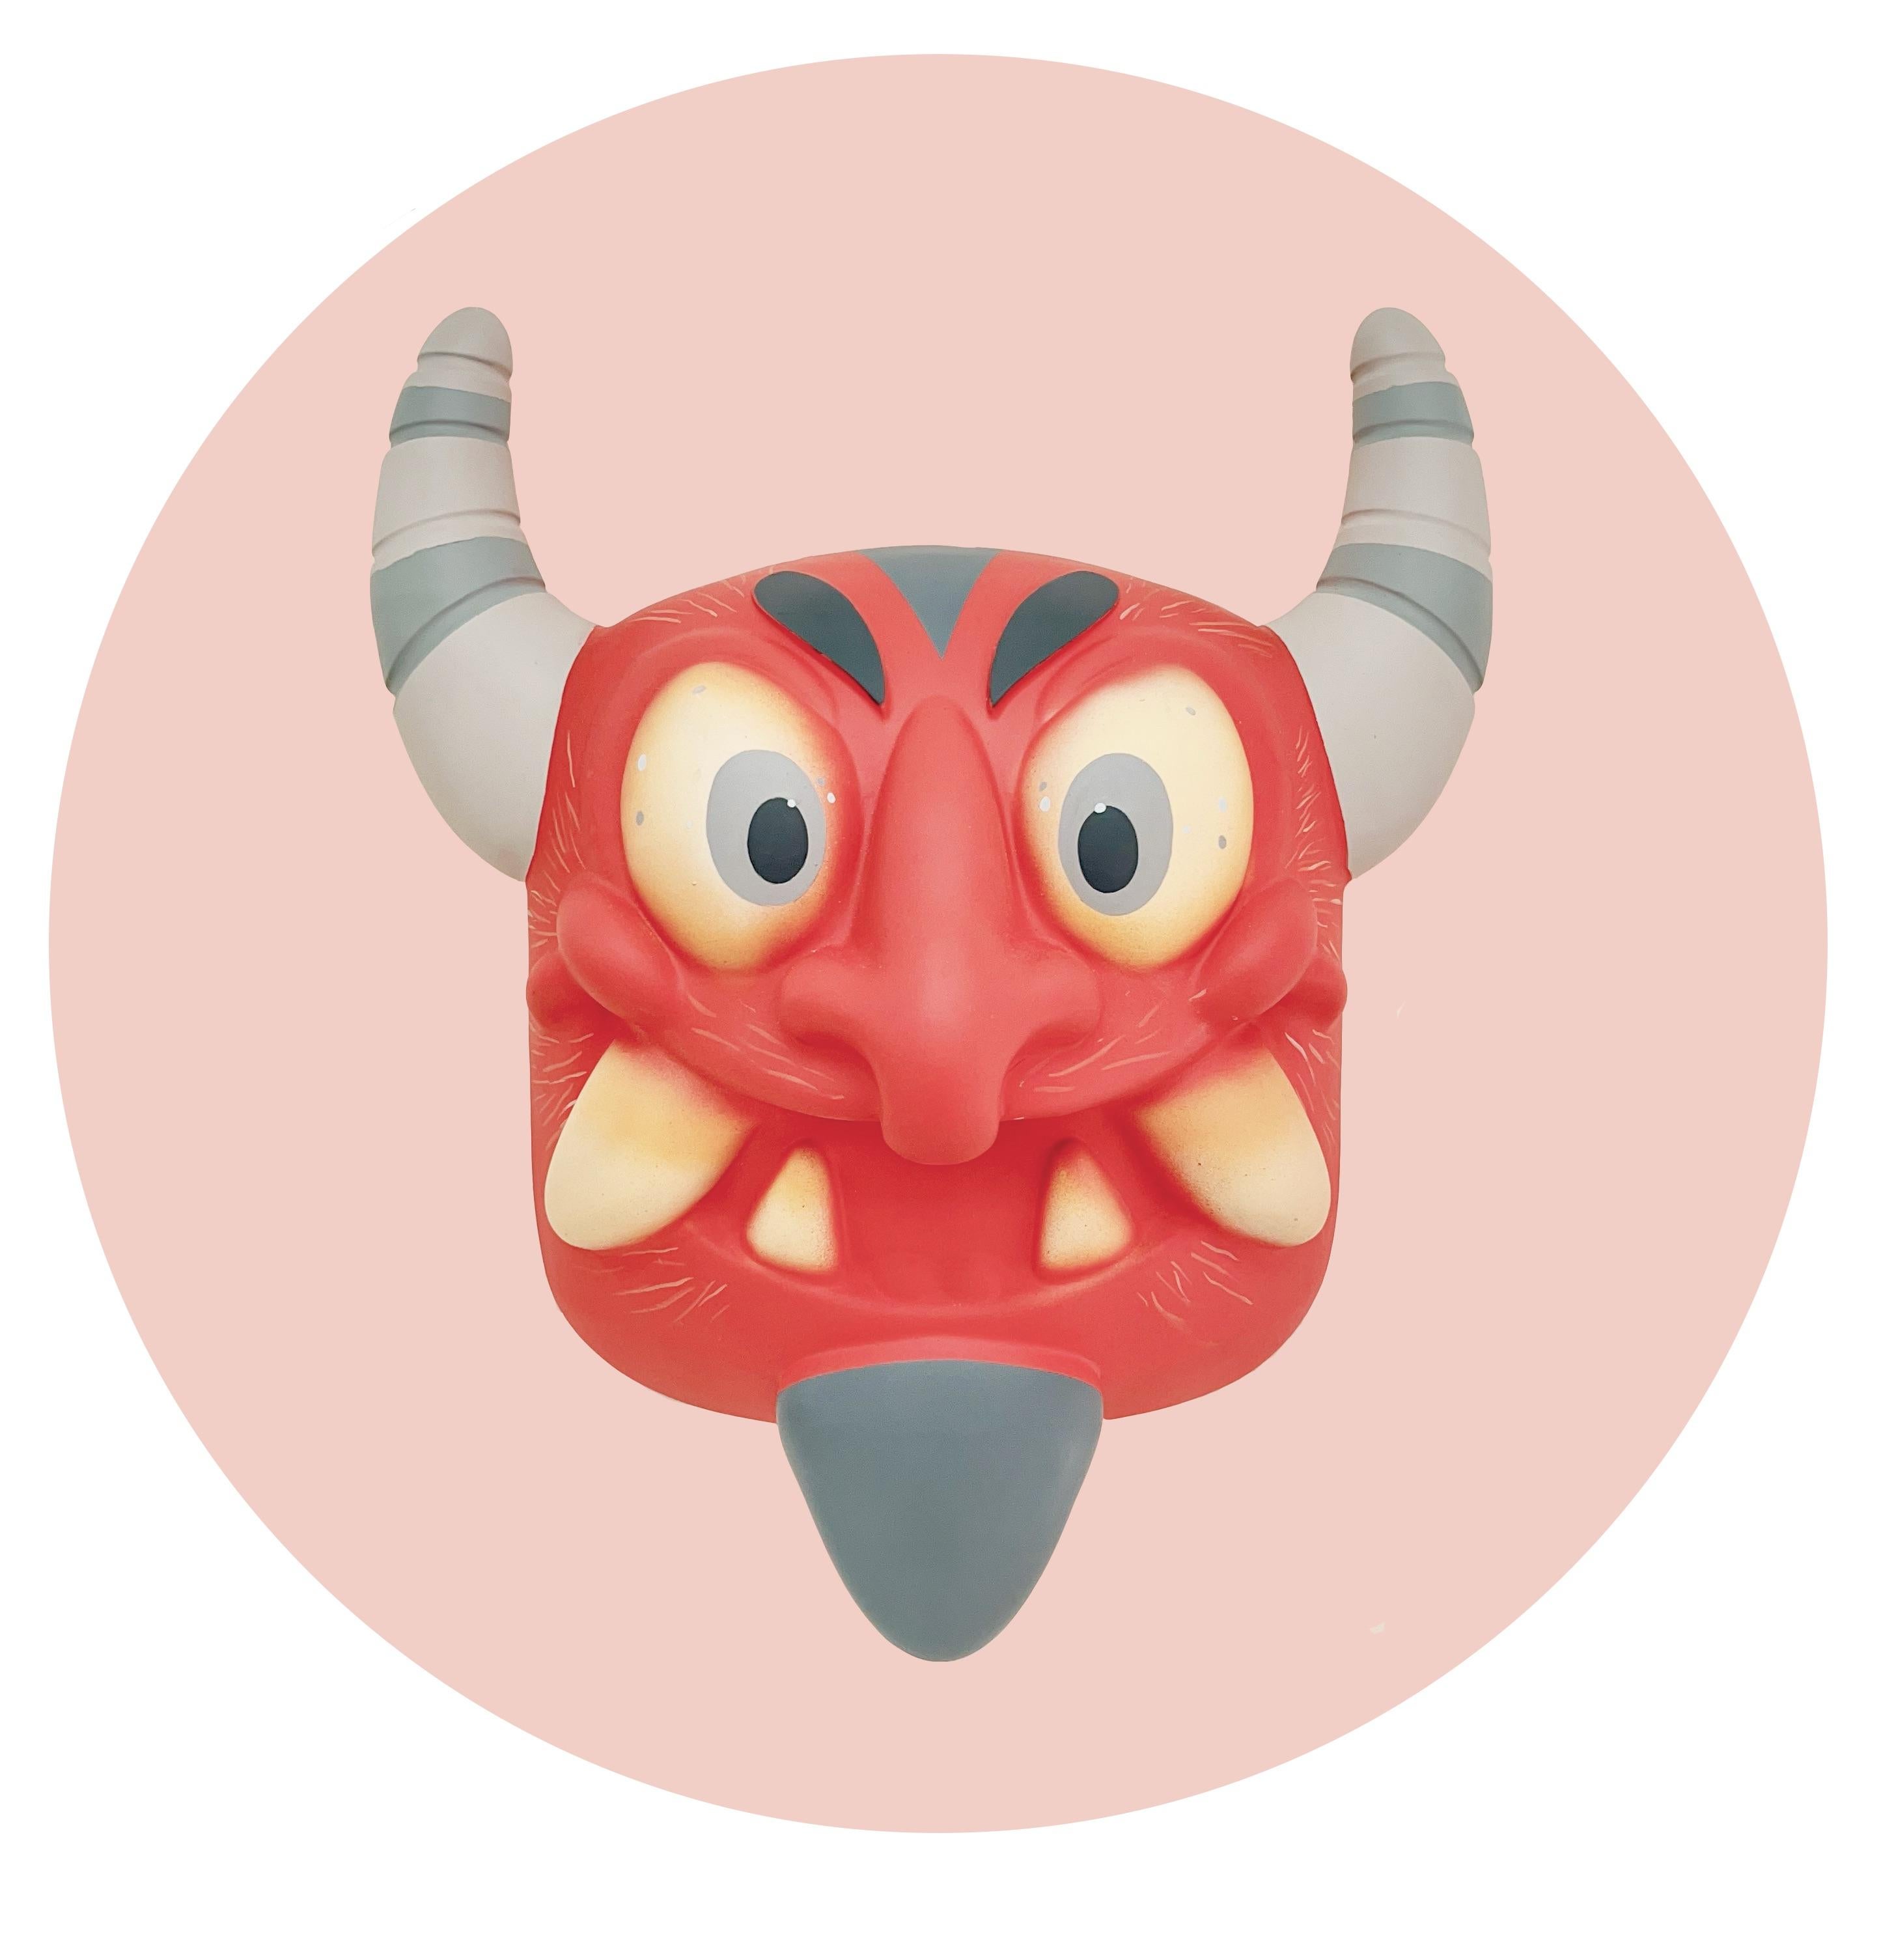 "Diablito 3" Kunstspielzeug, roter Teufel, Pop Art, mexikanisch, Maske, zeitgenössisch, Skulptur